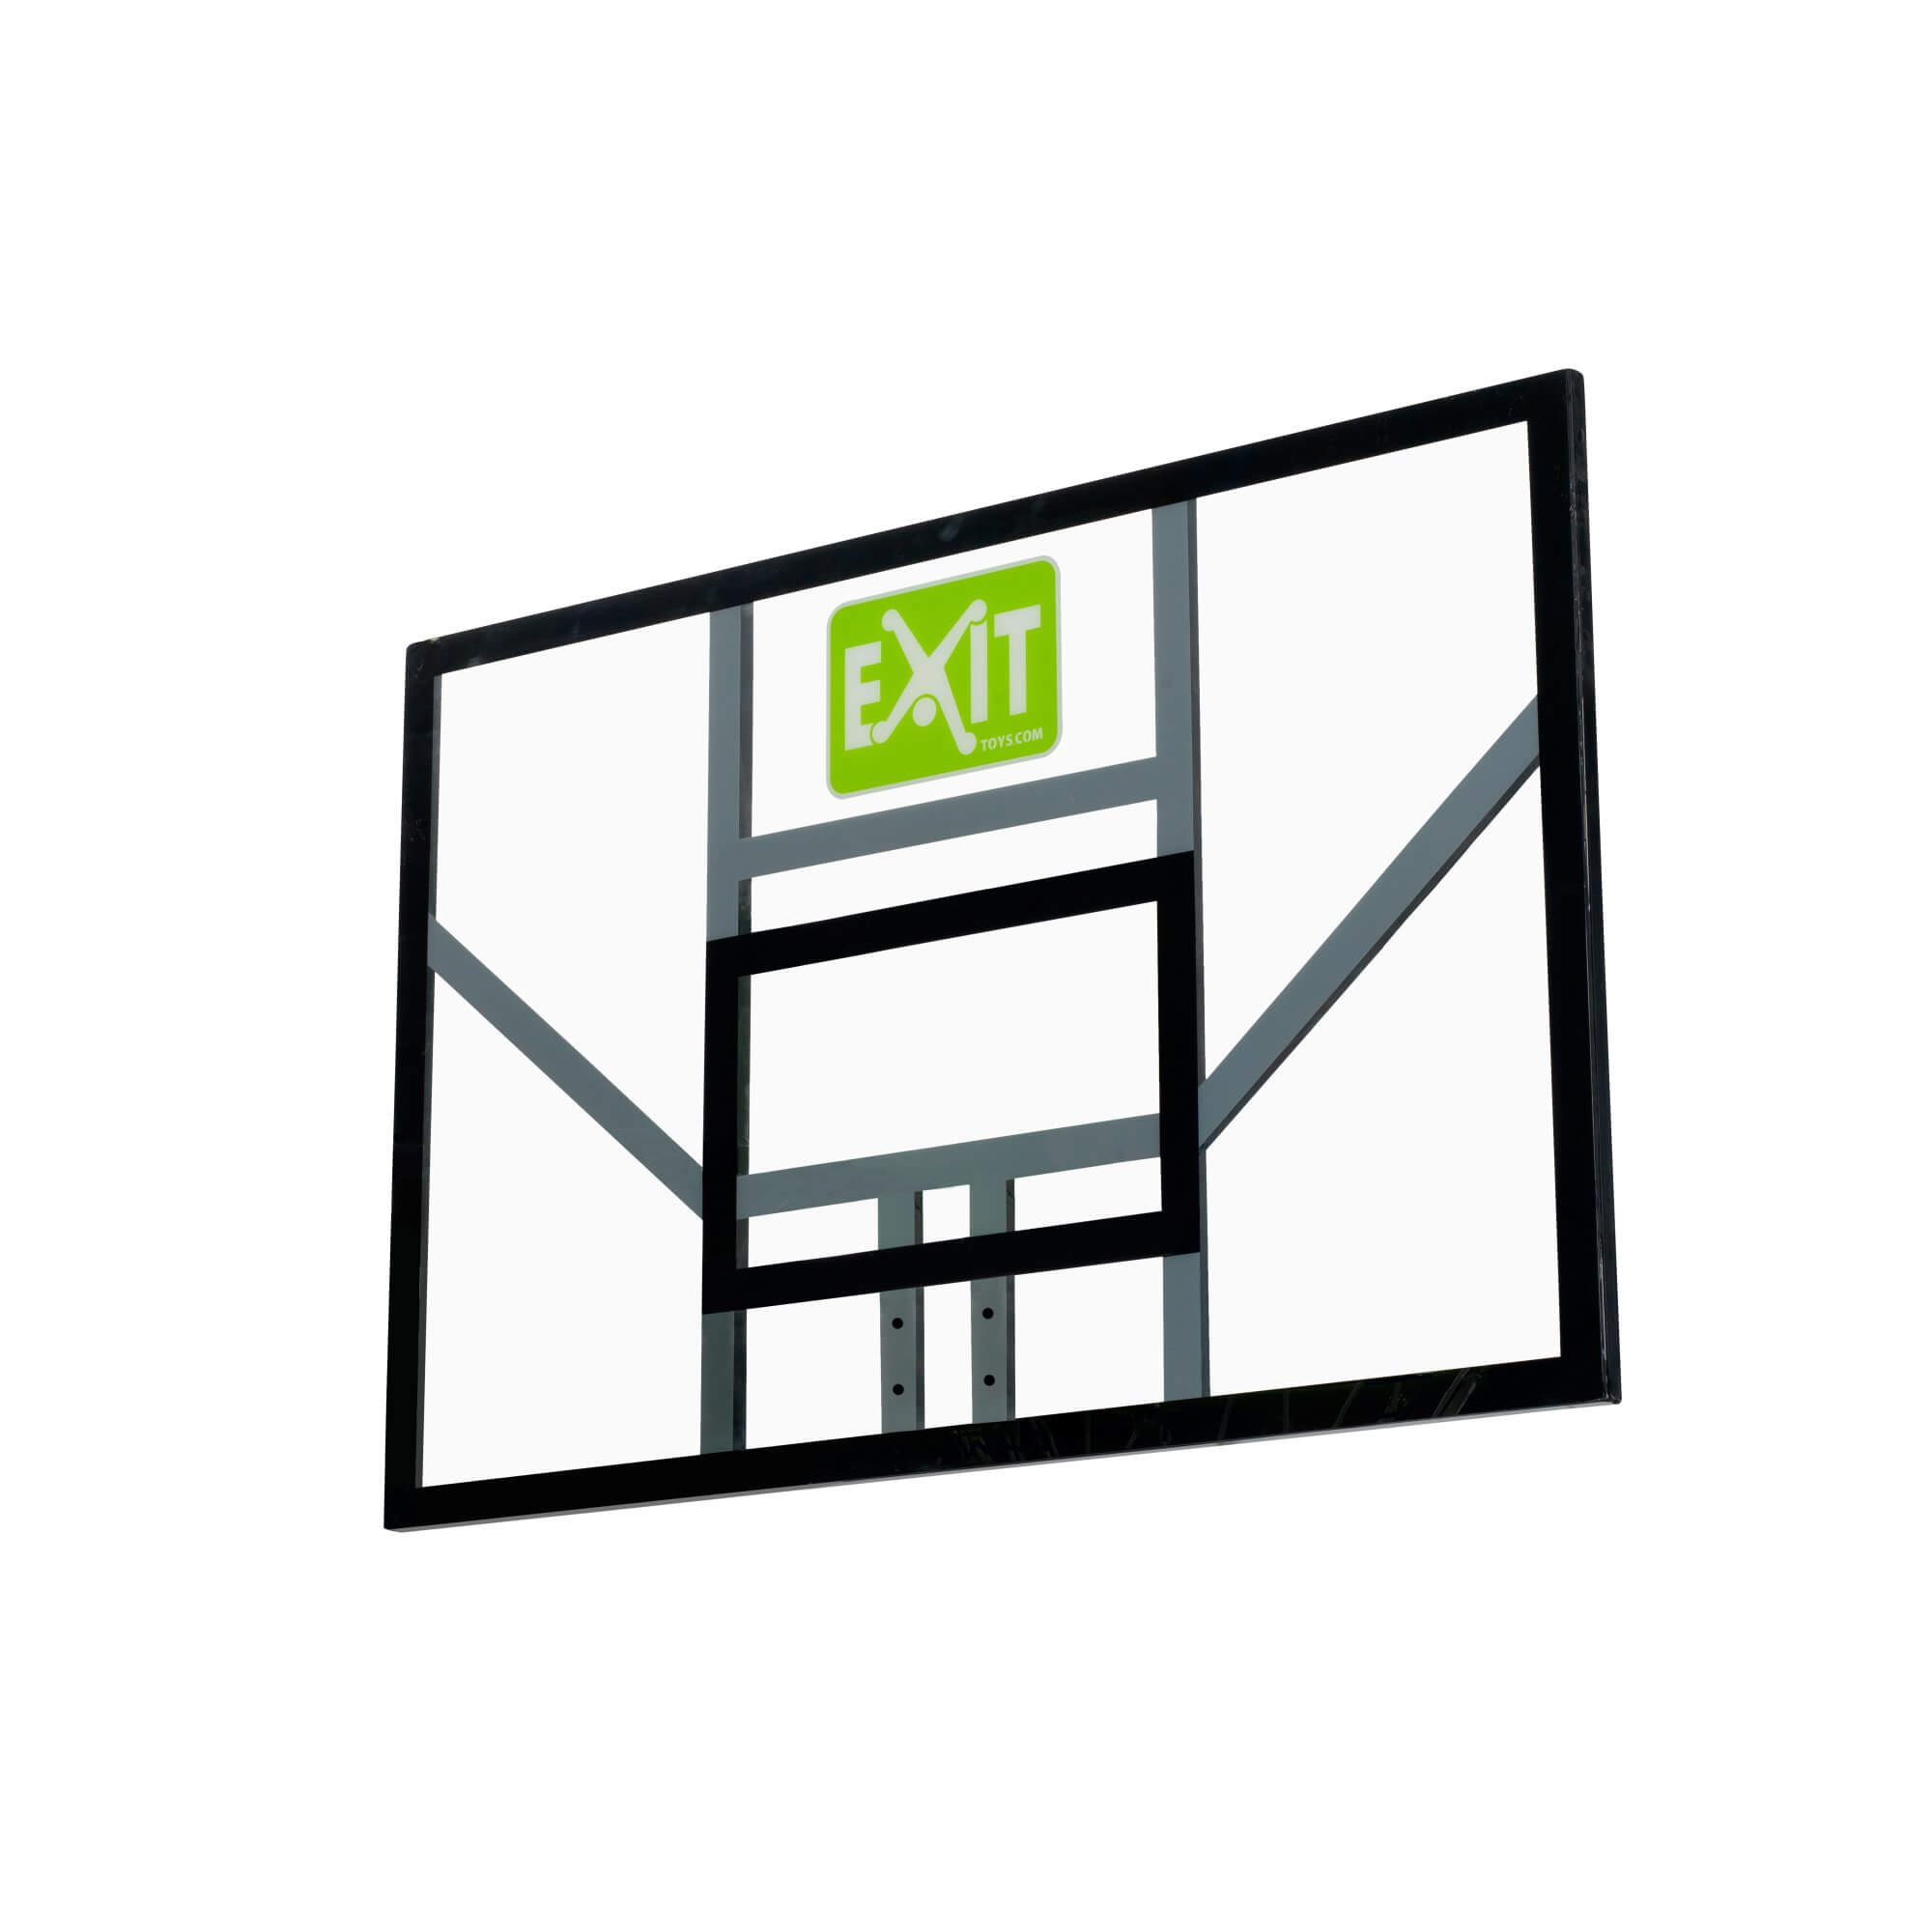 EXIT Galaxy Basketballbrett grün-schwarz Main